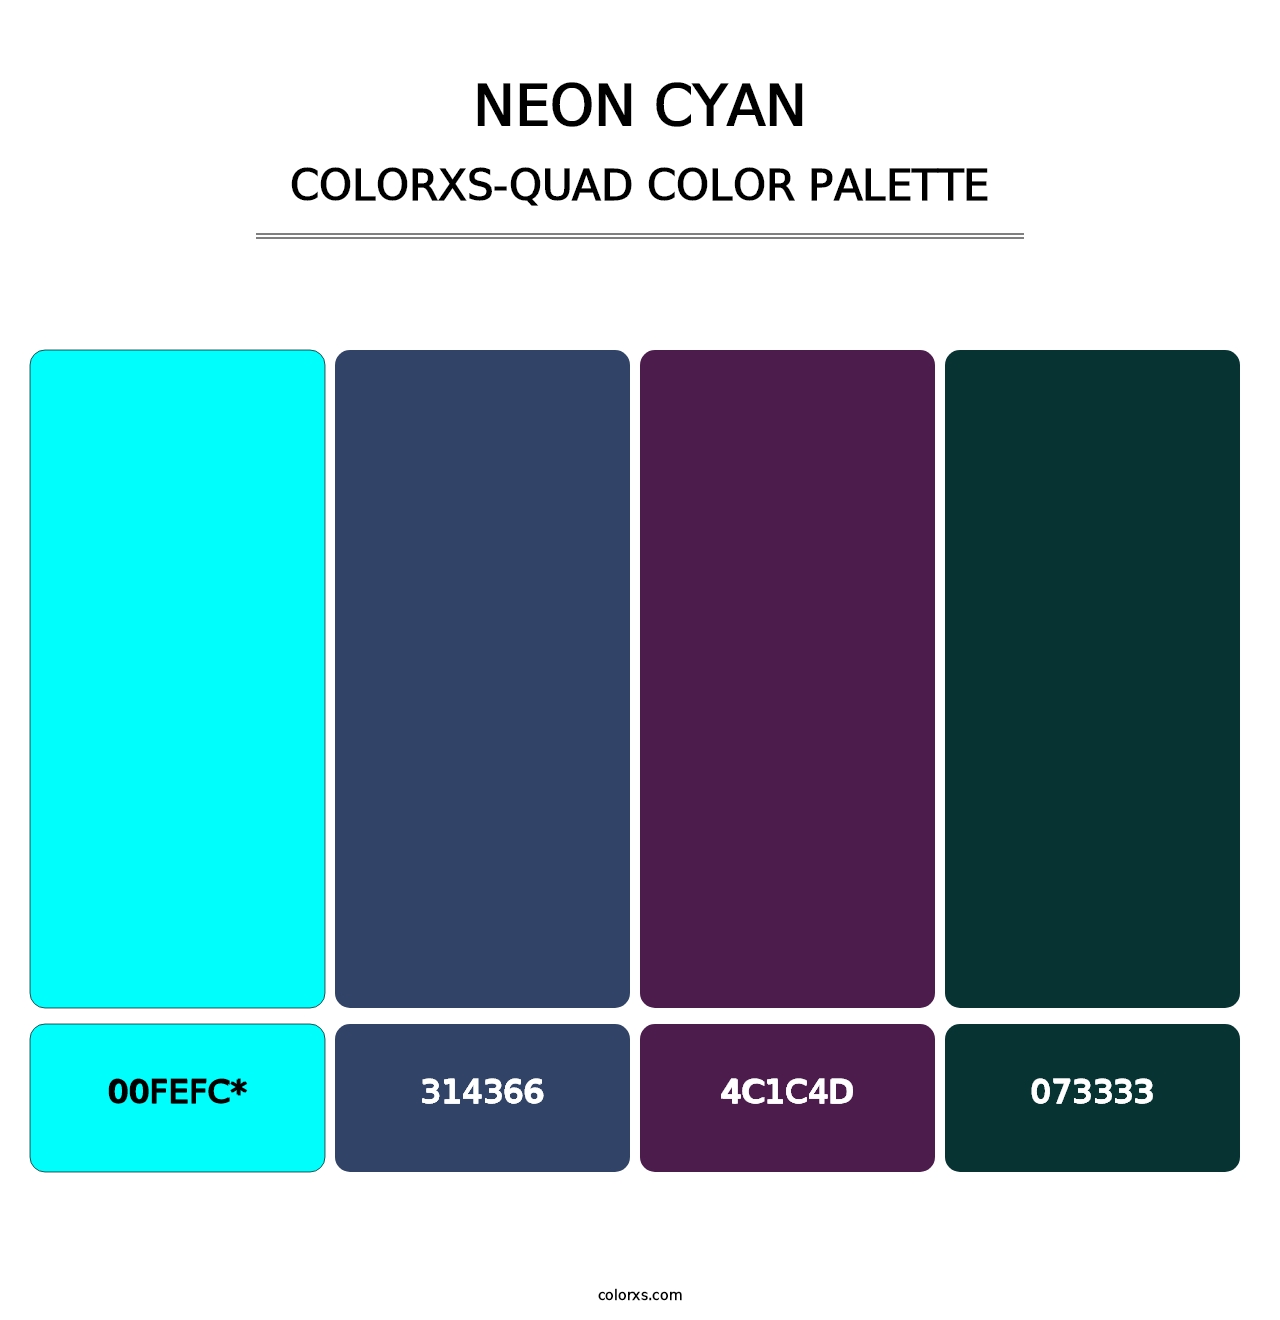 Neon Cyan - Colorxs Quad Palette